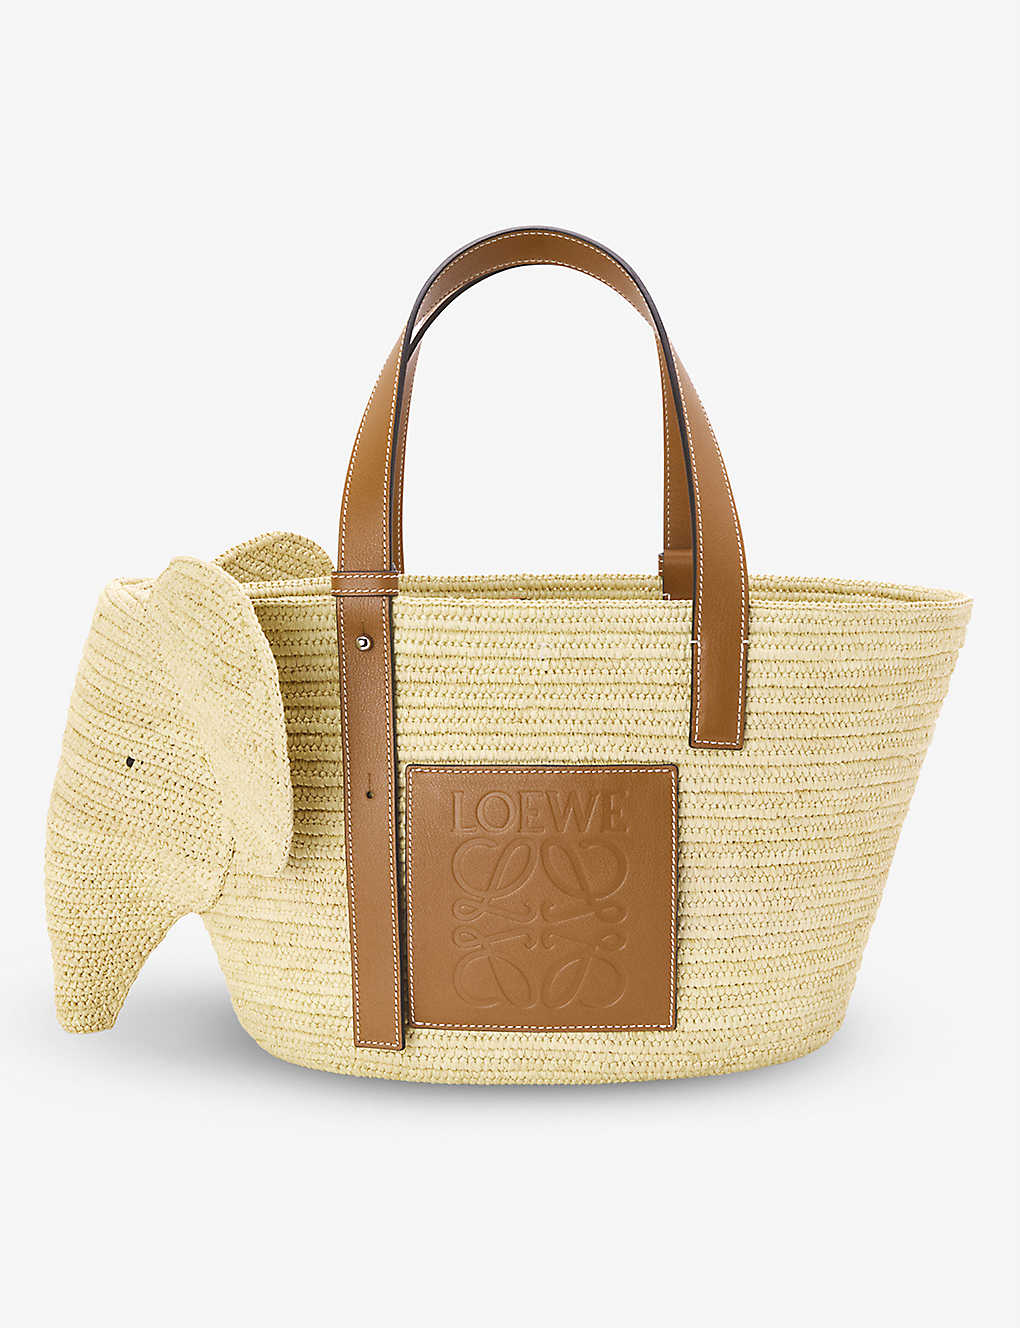 Loewe Elephant Raffia And Leather Shoulder Bag In Beige/tan